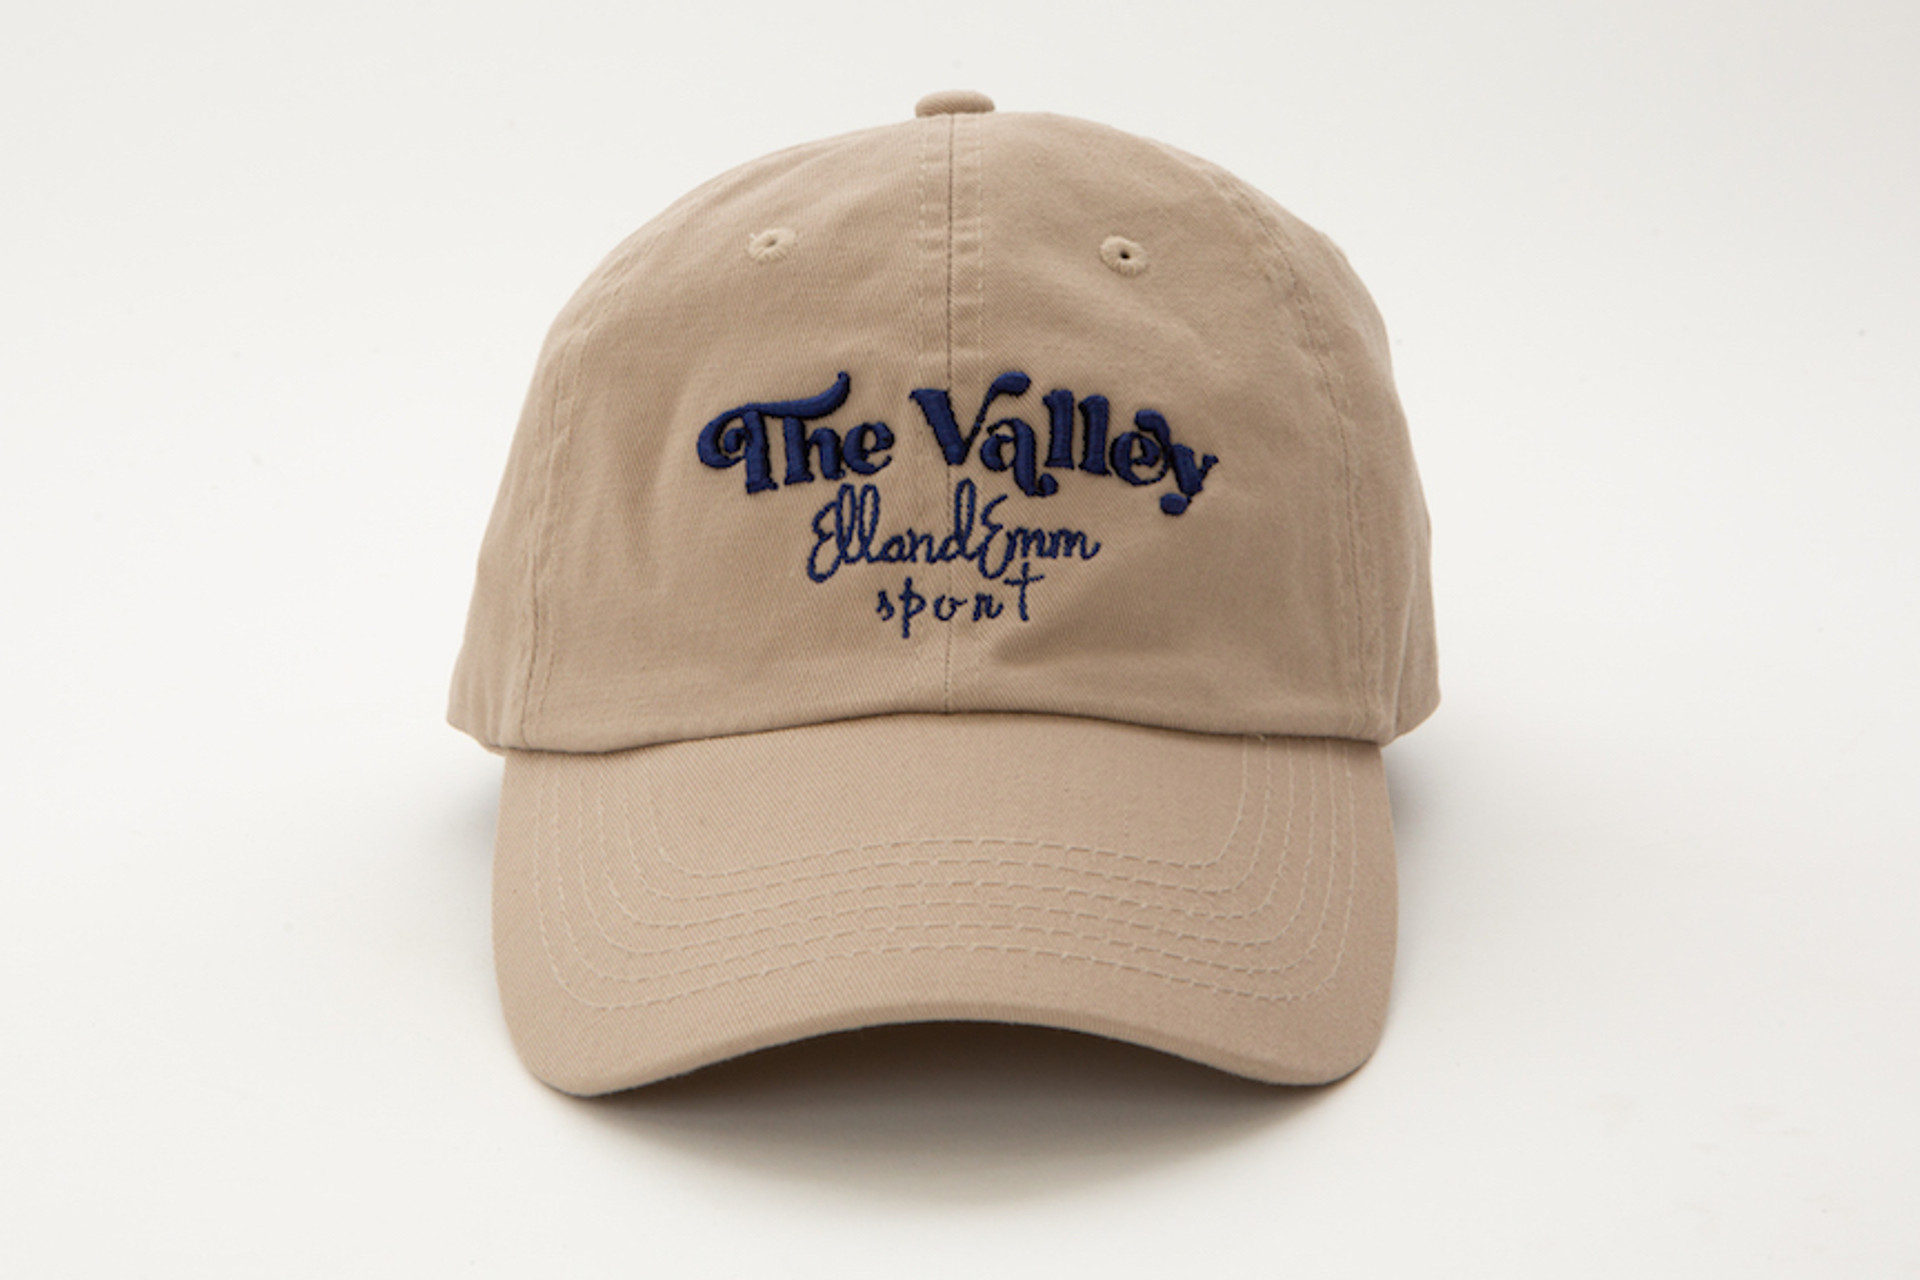 The Valley Tee - EllandEmm